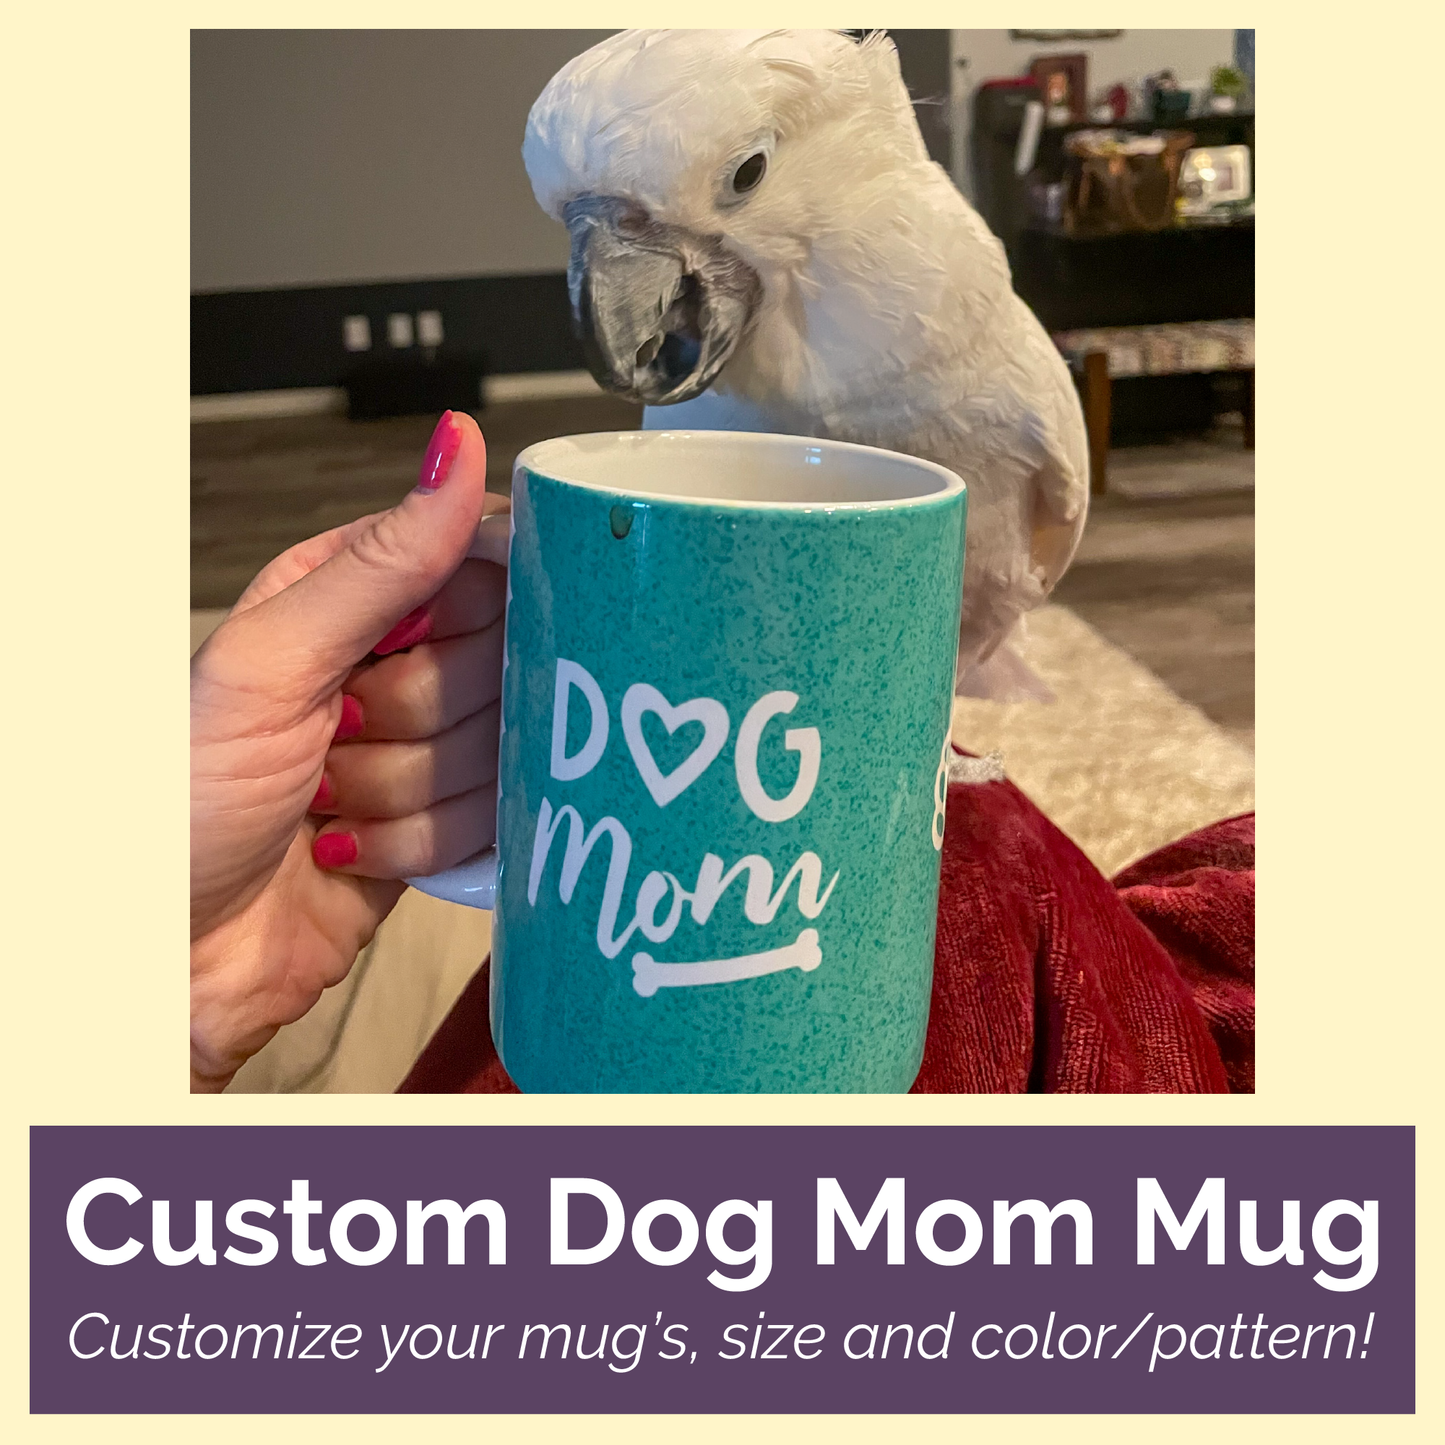 Custom Dog Mom Mug with bird